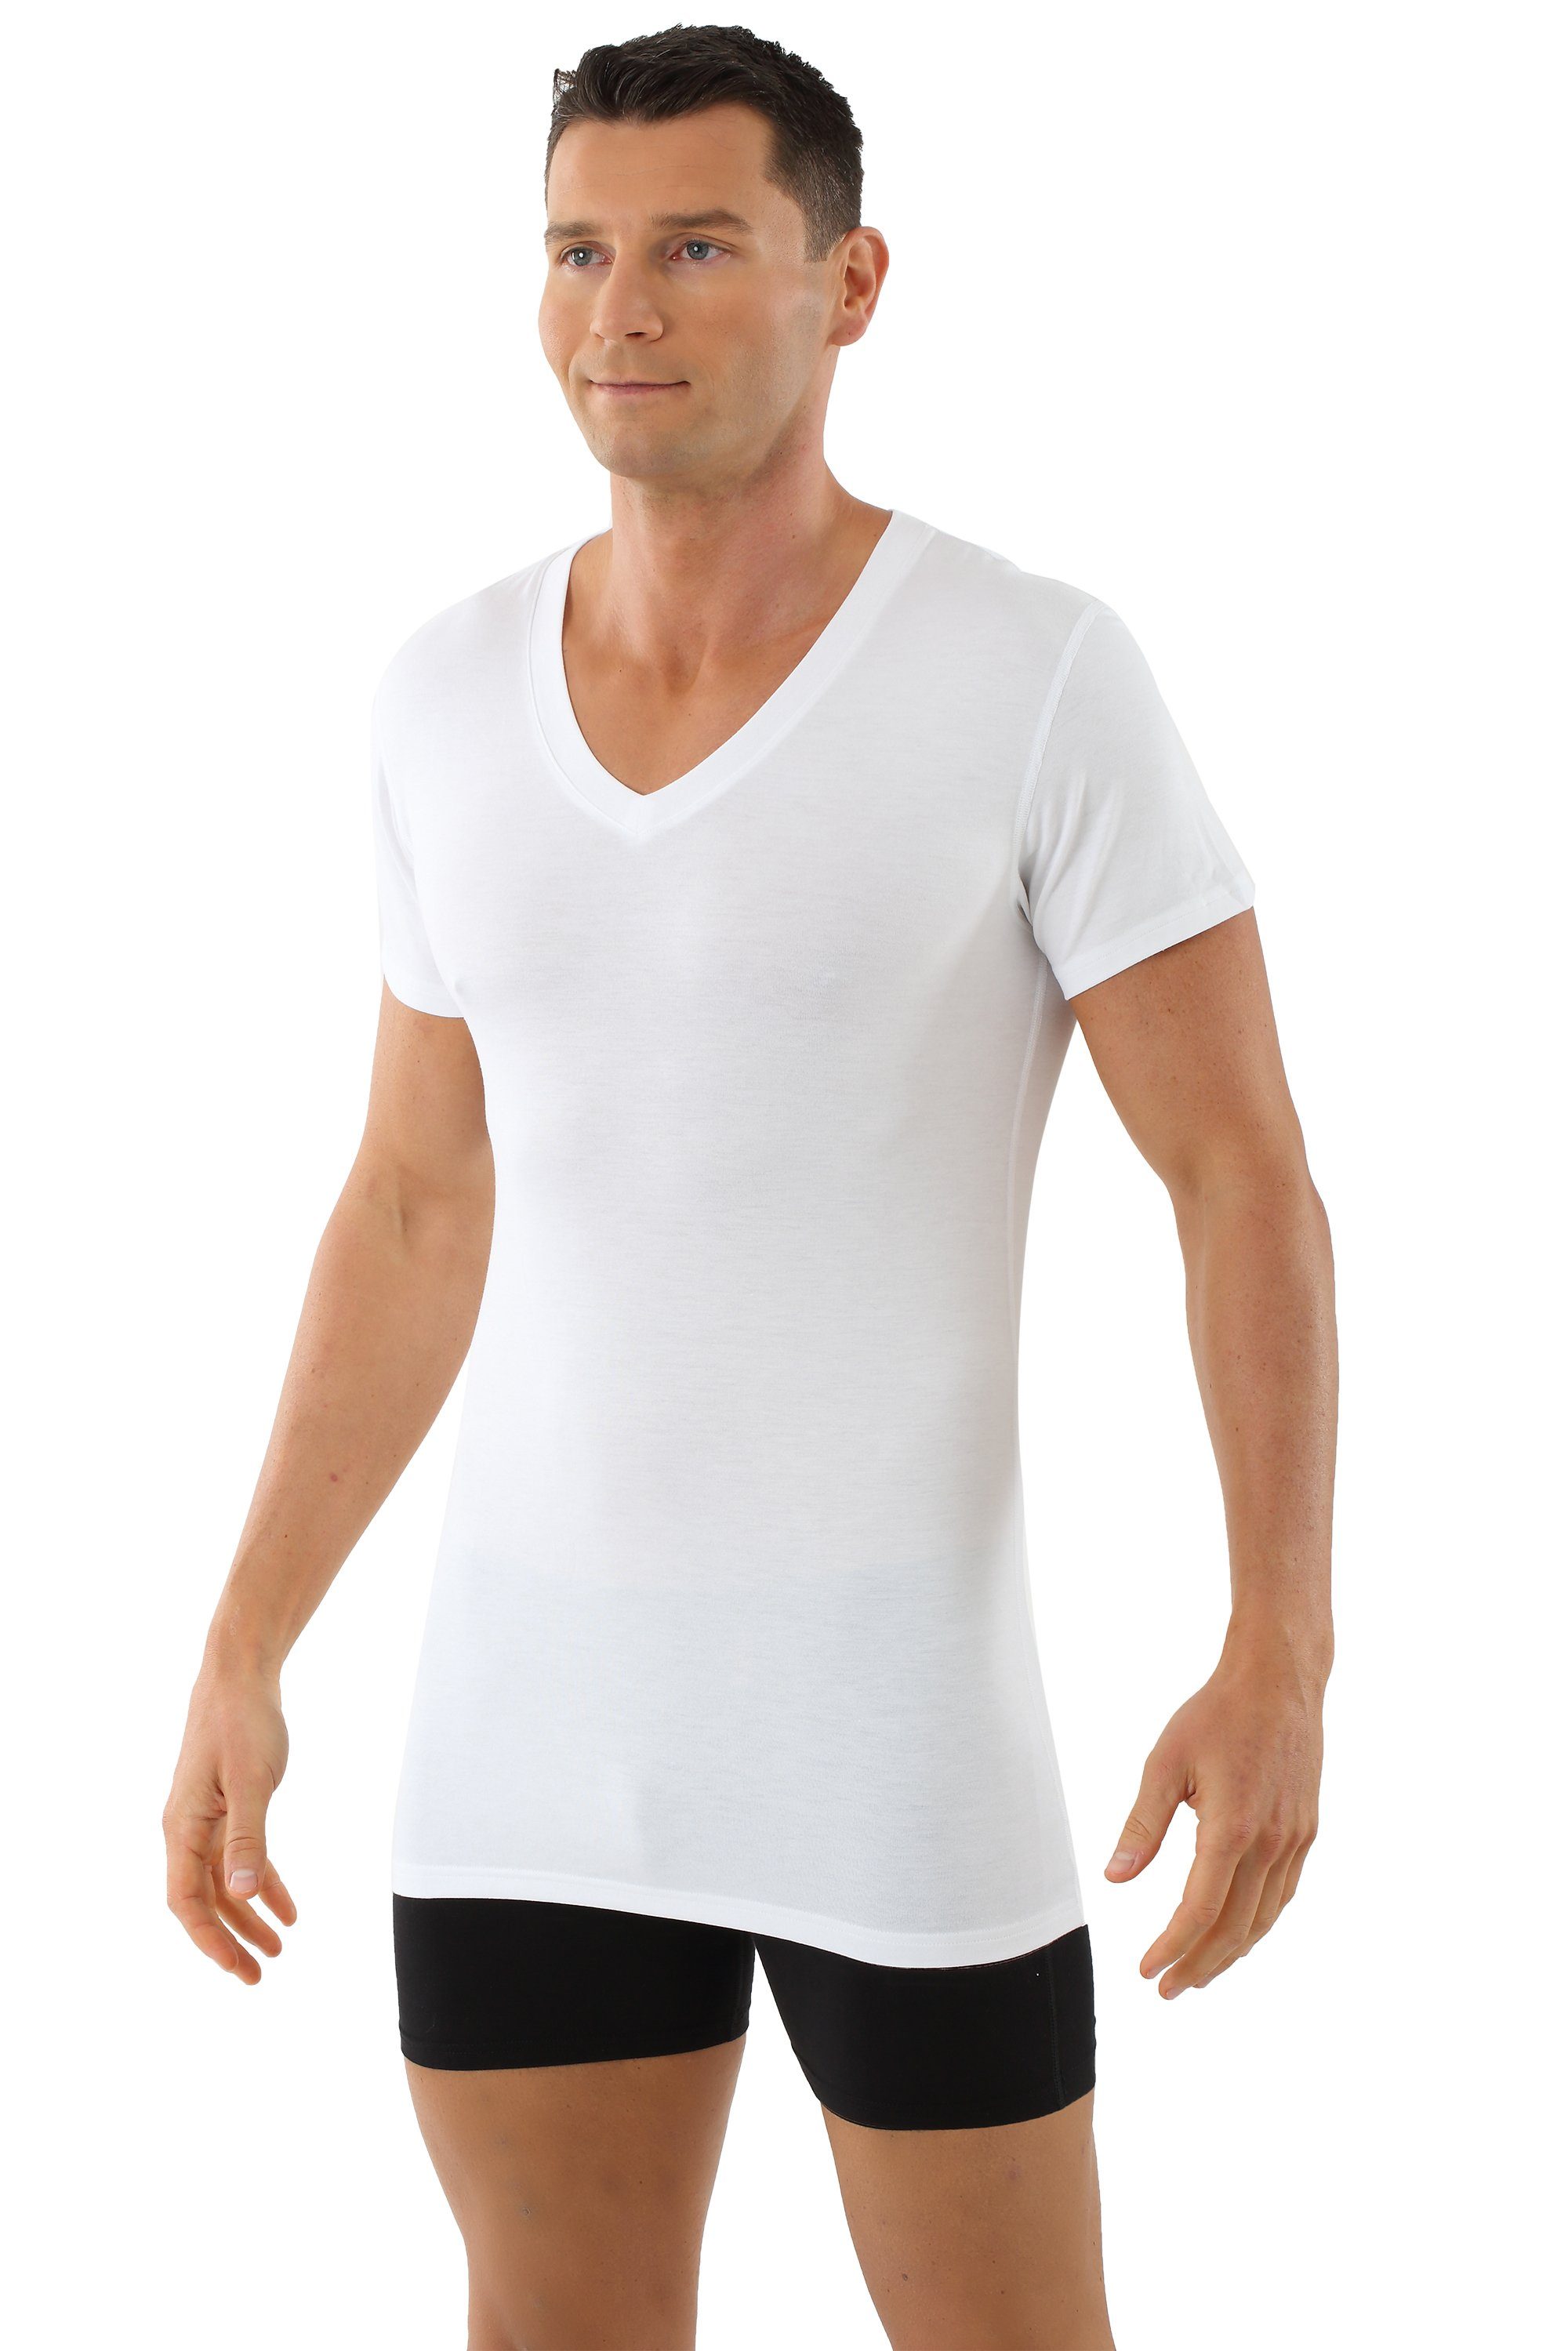 Albert Kreuz Unterhemd V-Neck light atmungsaktiv Kurzarm (kein Set, kein Set) | Unterhemden